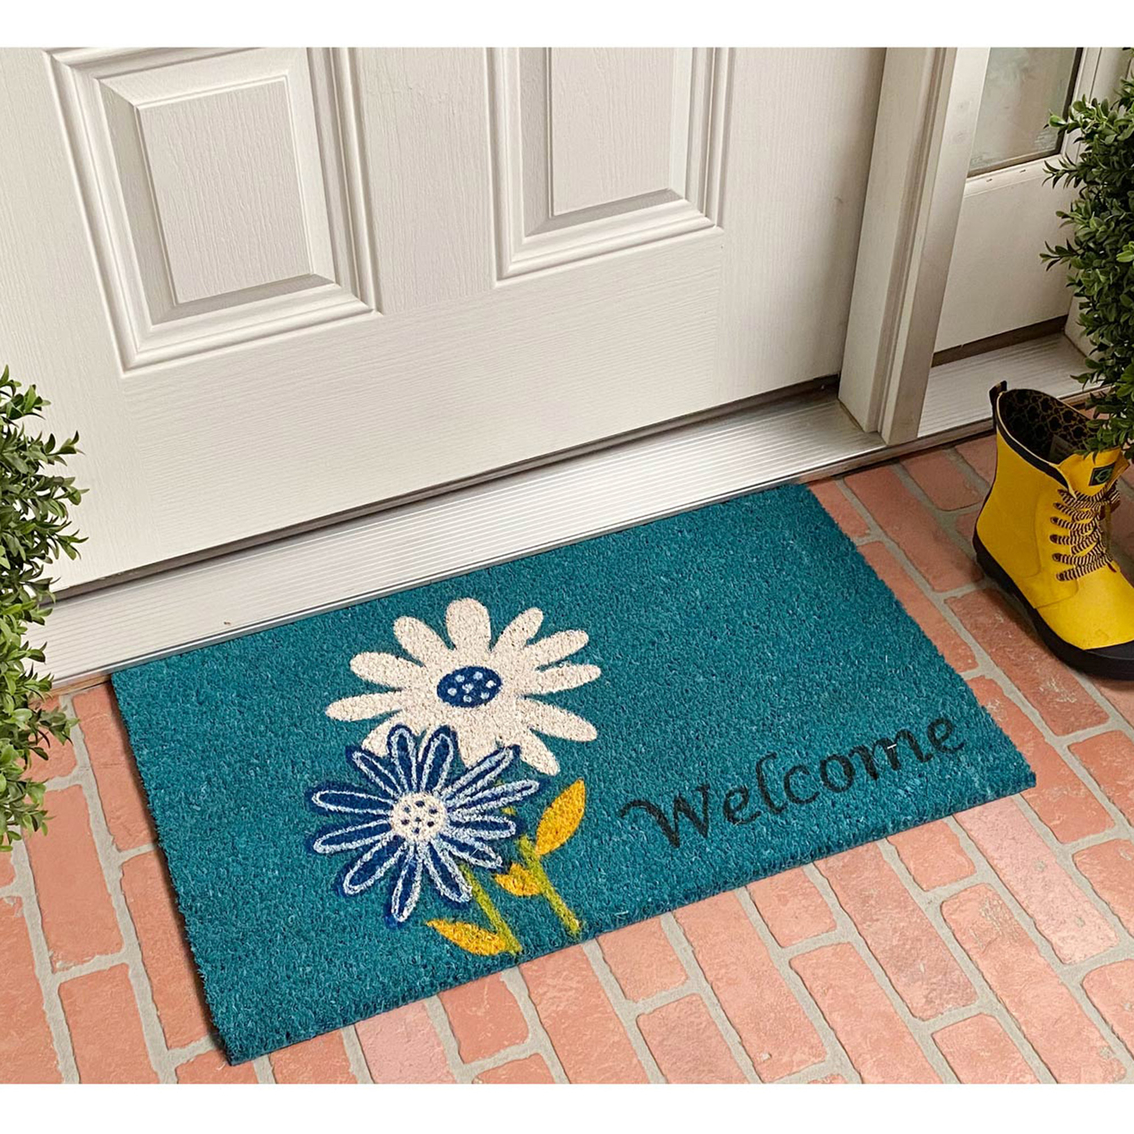 Calloway Mills 17 x 29 in. Daisy Welcome Doormat - Image 2 of 6